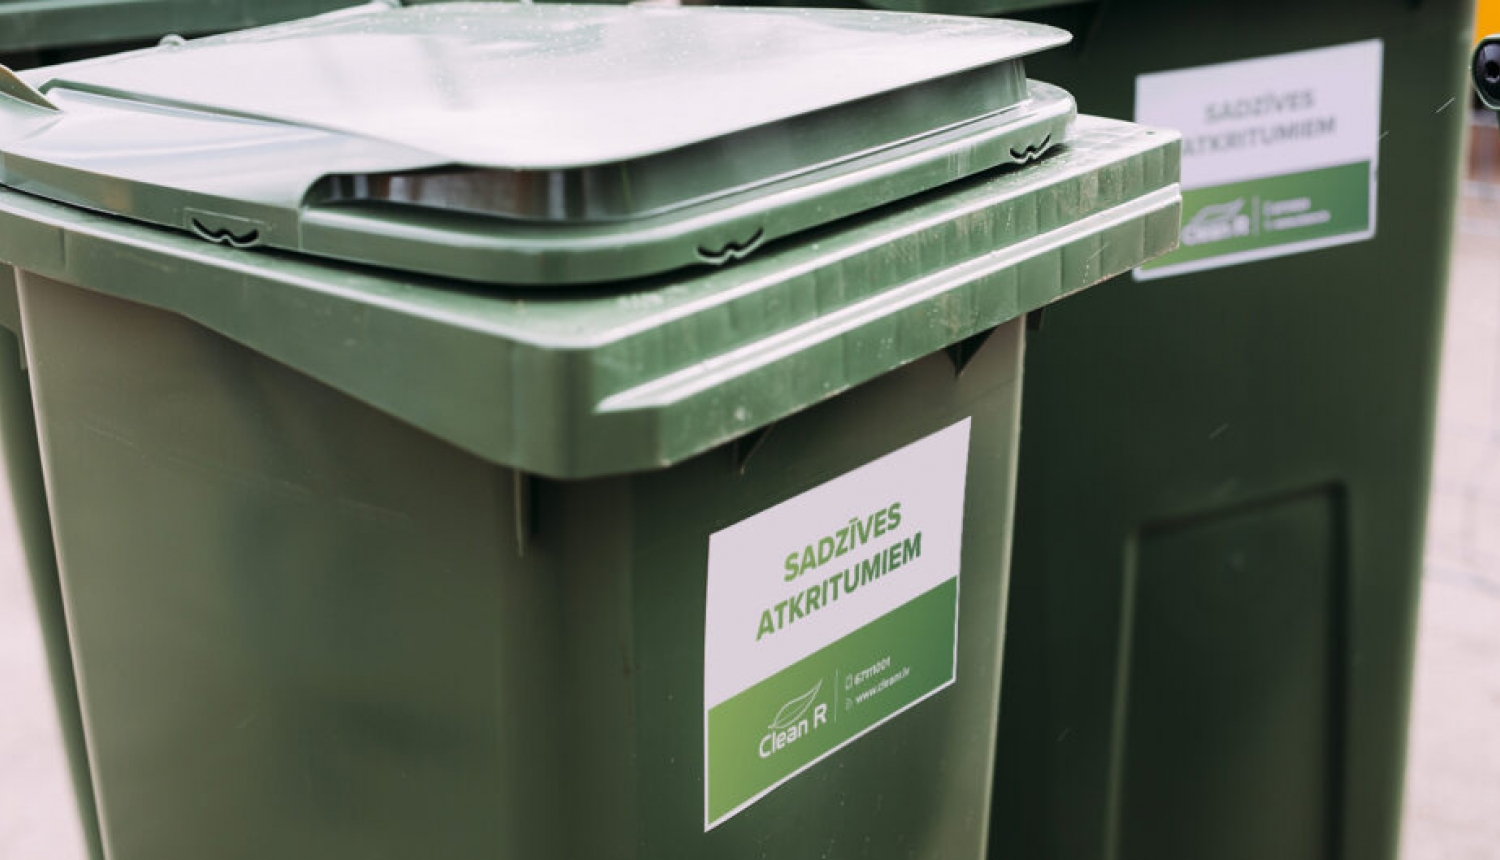 Clean R sadzīves atkritumu konteineri